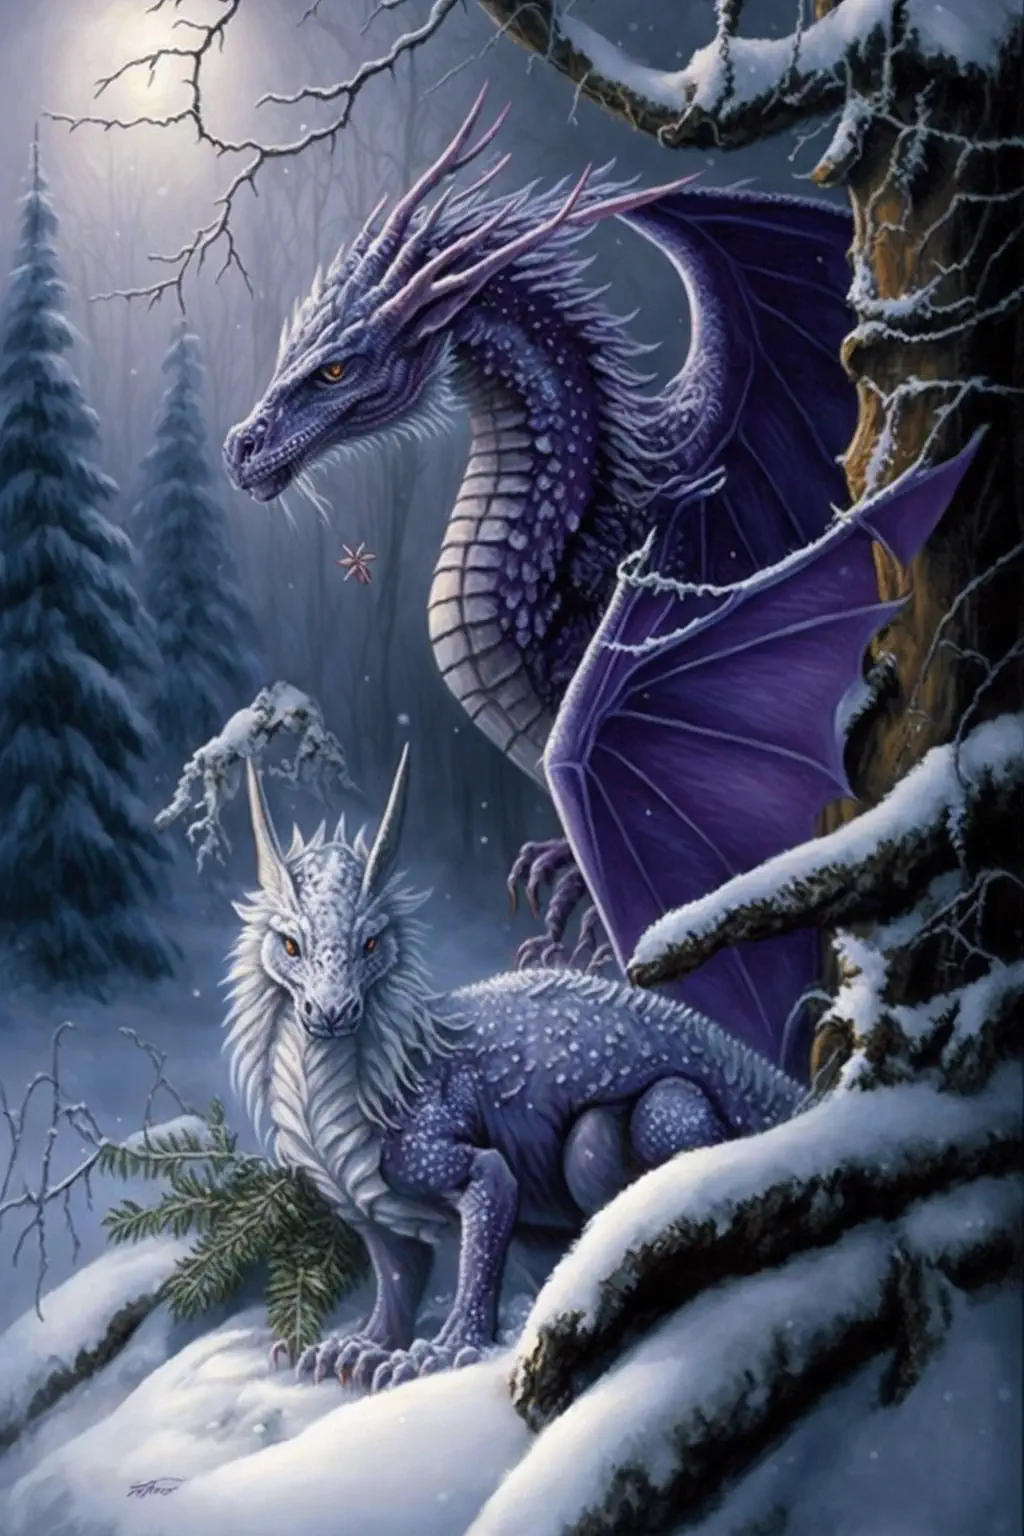 Drak00sha_big_purple_dragon_and_small_white_dragoness_in_Siberi_4cddc6c0-cefb-4ae3-9631-e6694aeeacbe